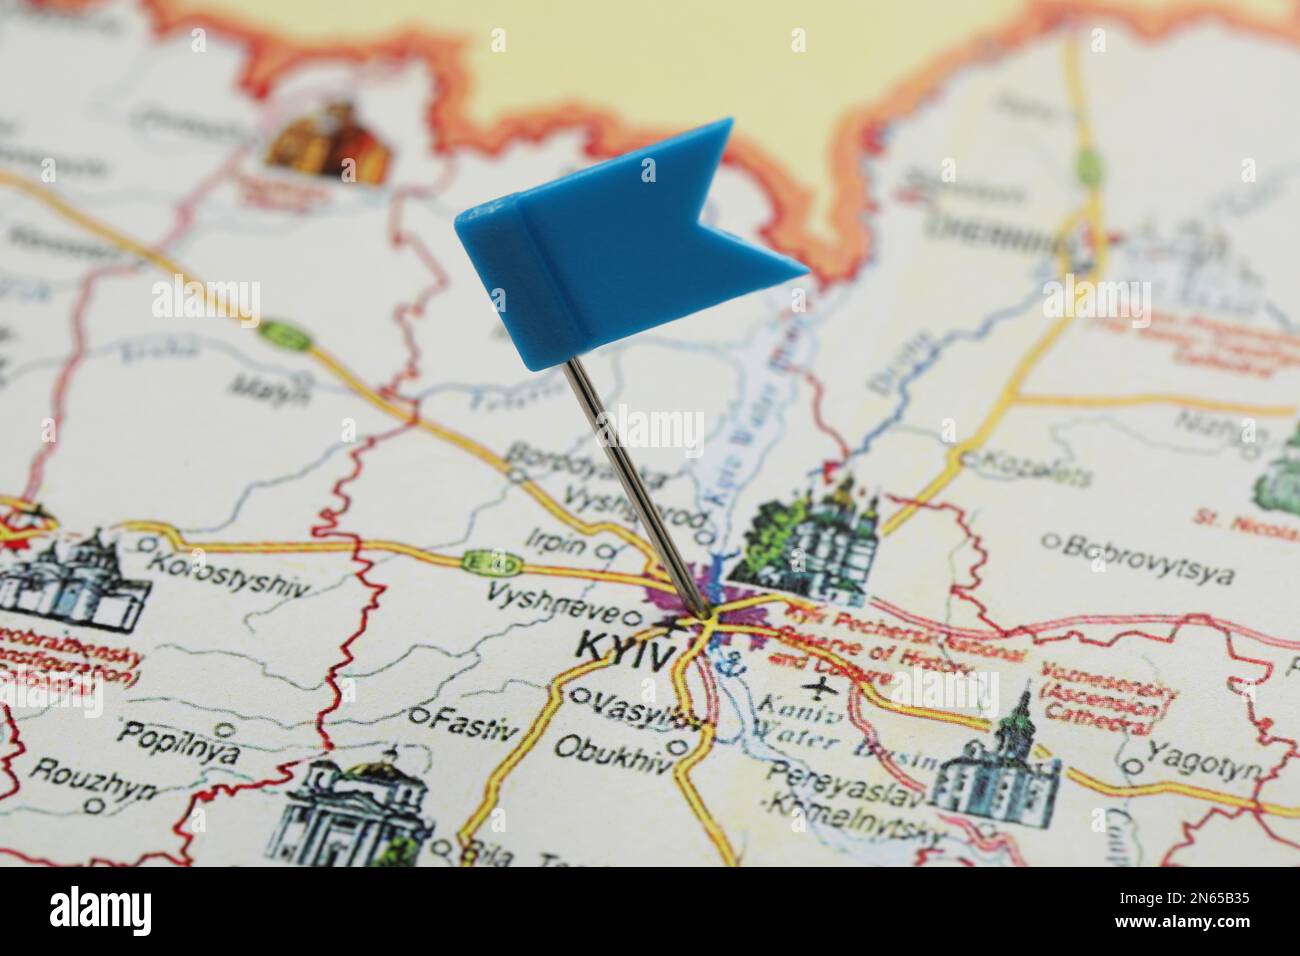 MYKOLAIV, UKRAINE - NOVEMBER 09, 2020: Kyiv city marked with push pin on map of Ukraine, closeup Stock Photo